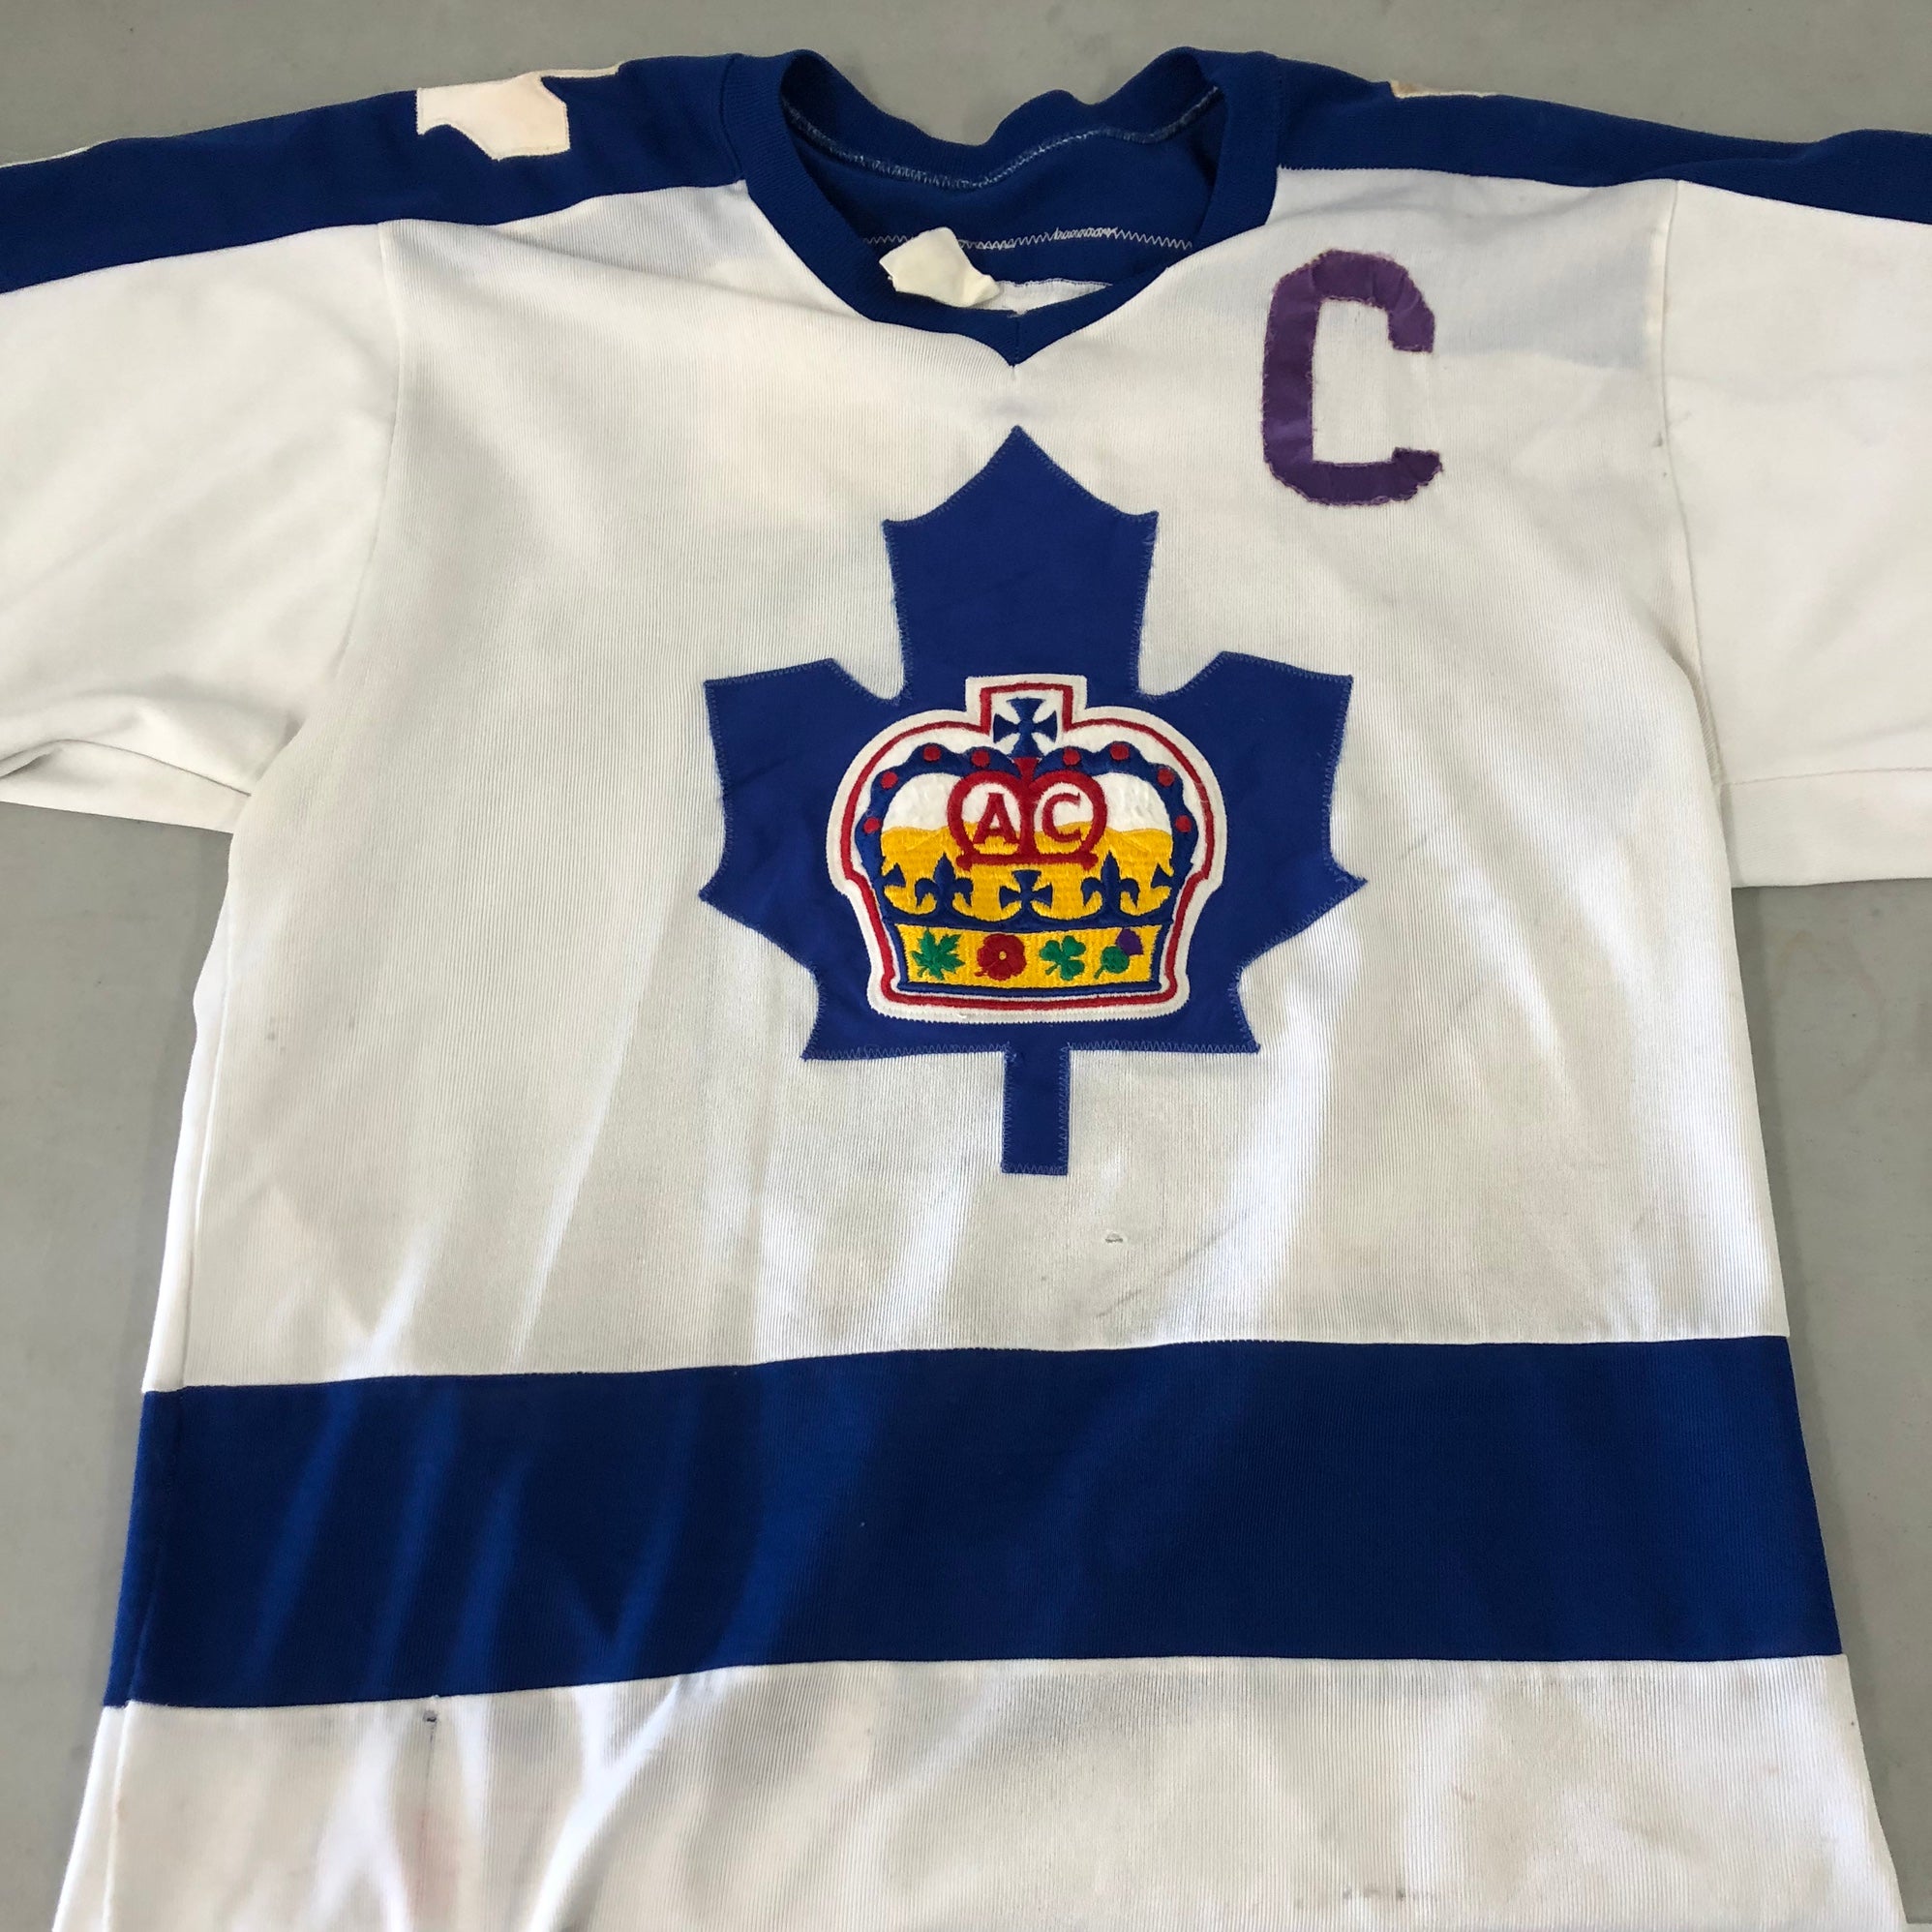 Vintage Toronto Marlies MTHL game jersey